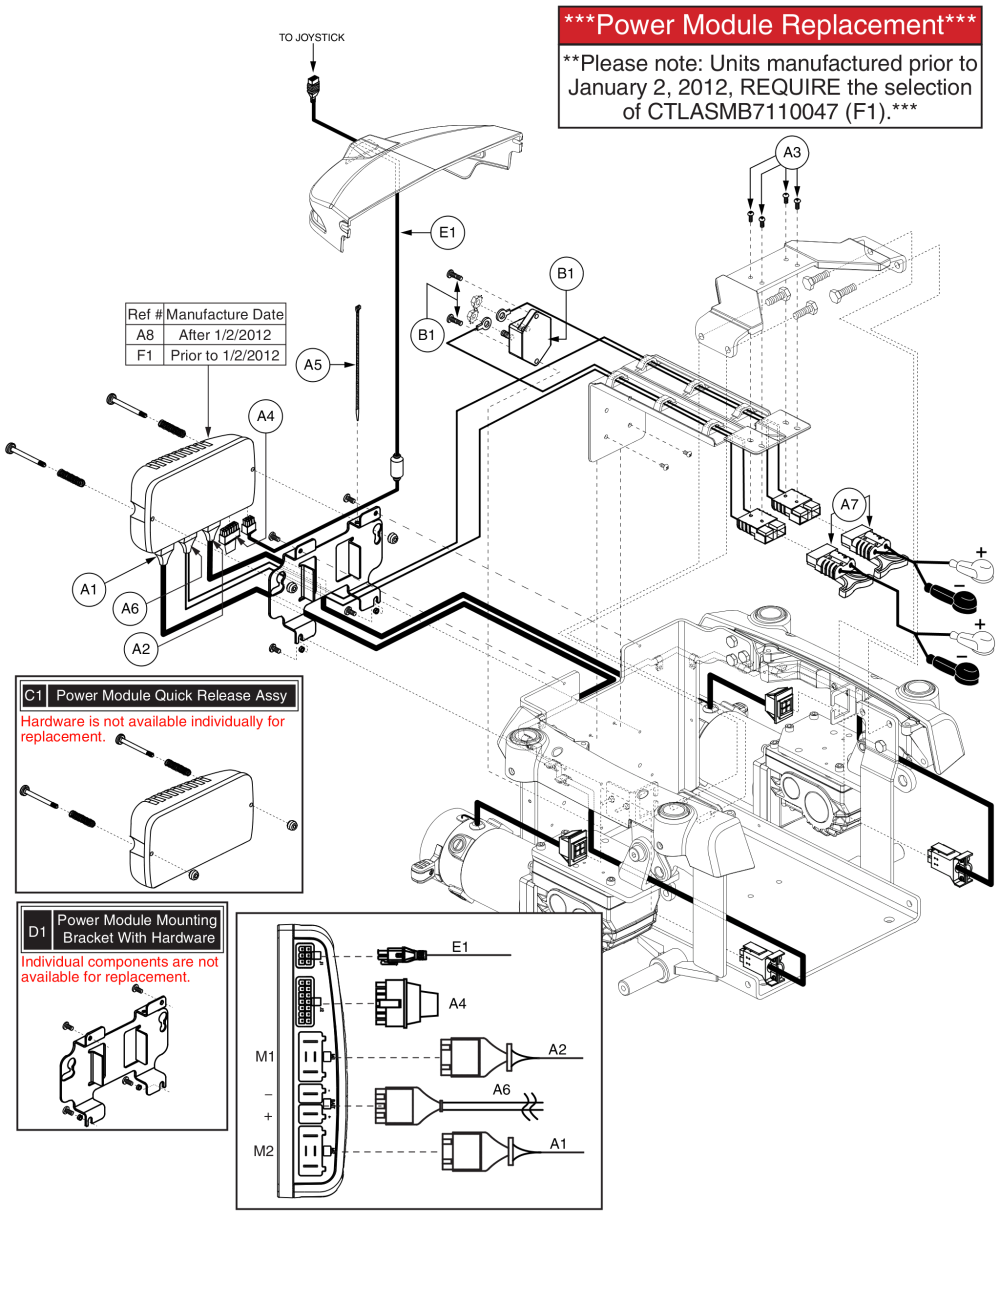 Q-logic Electronics, H2 Motor, Non-power Positioning, Q6000z parts diagram